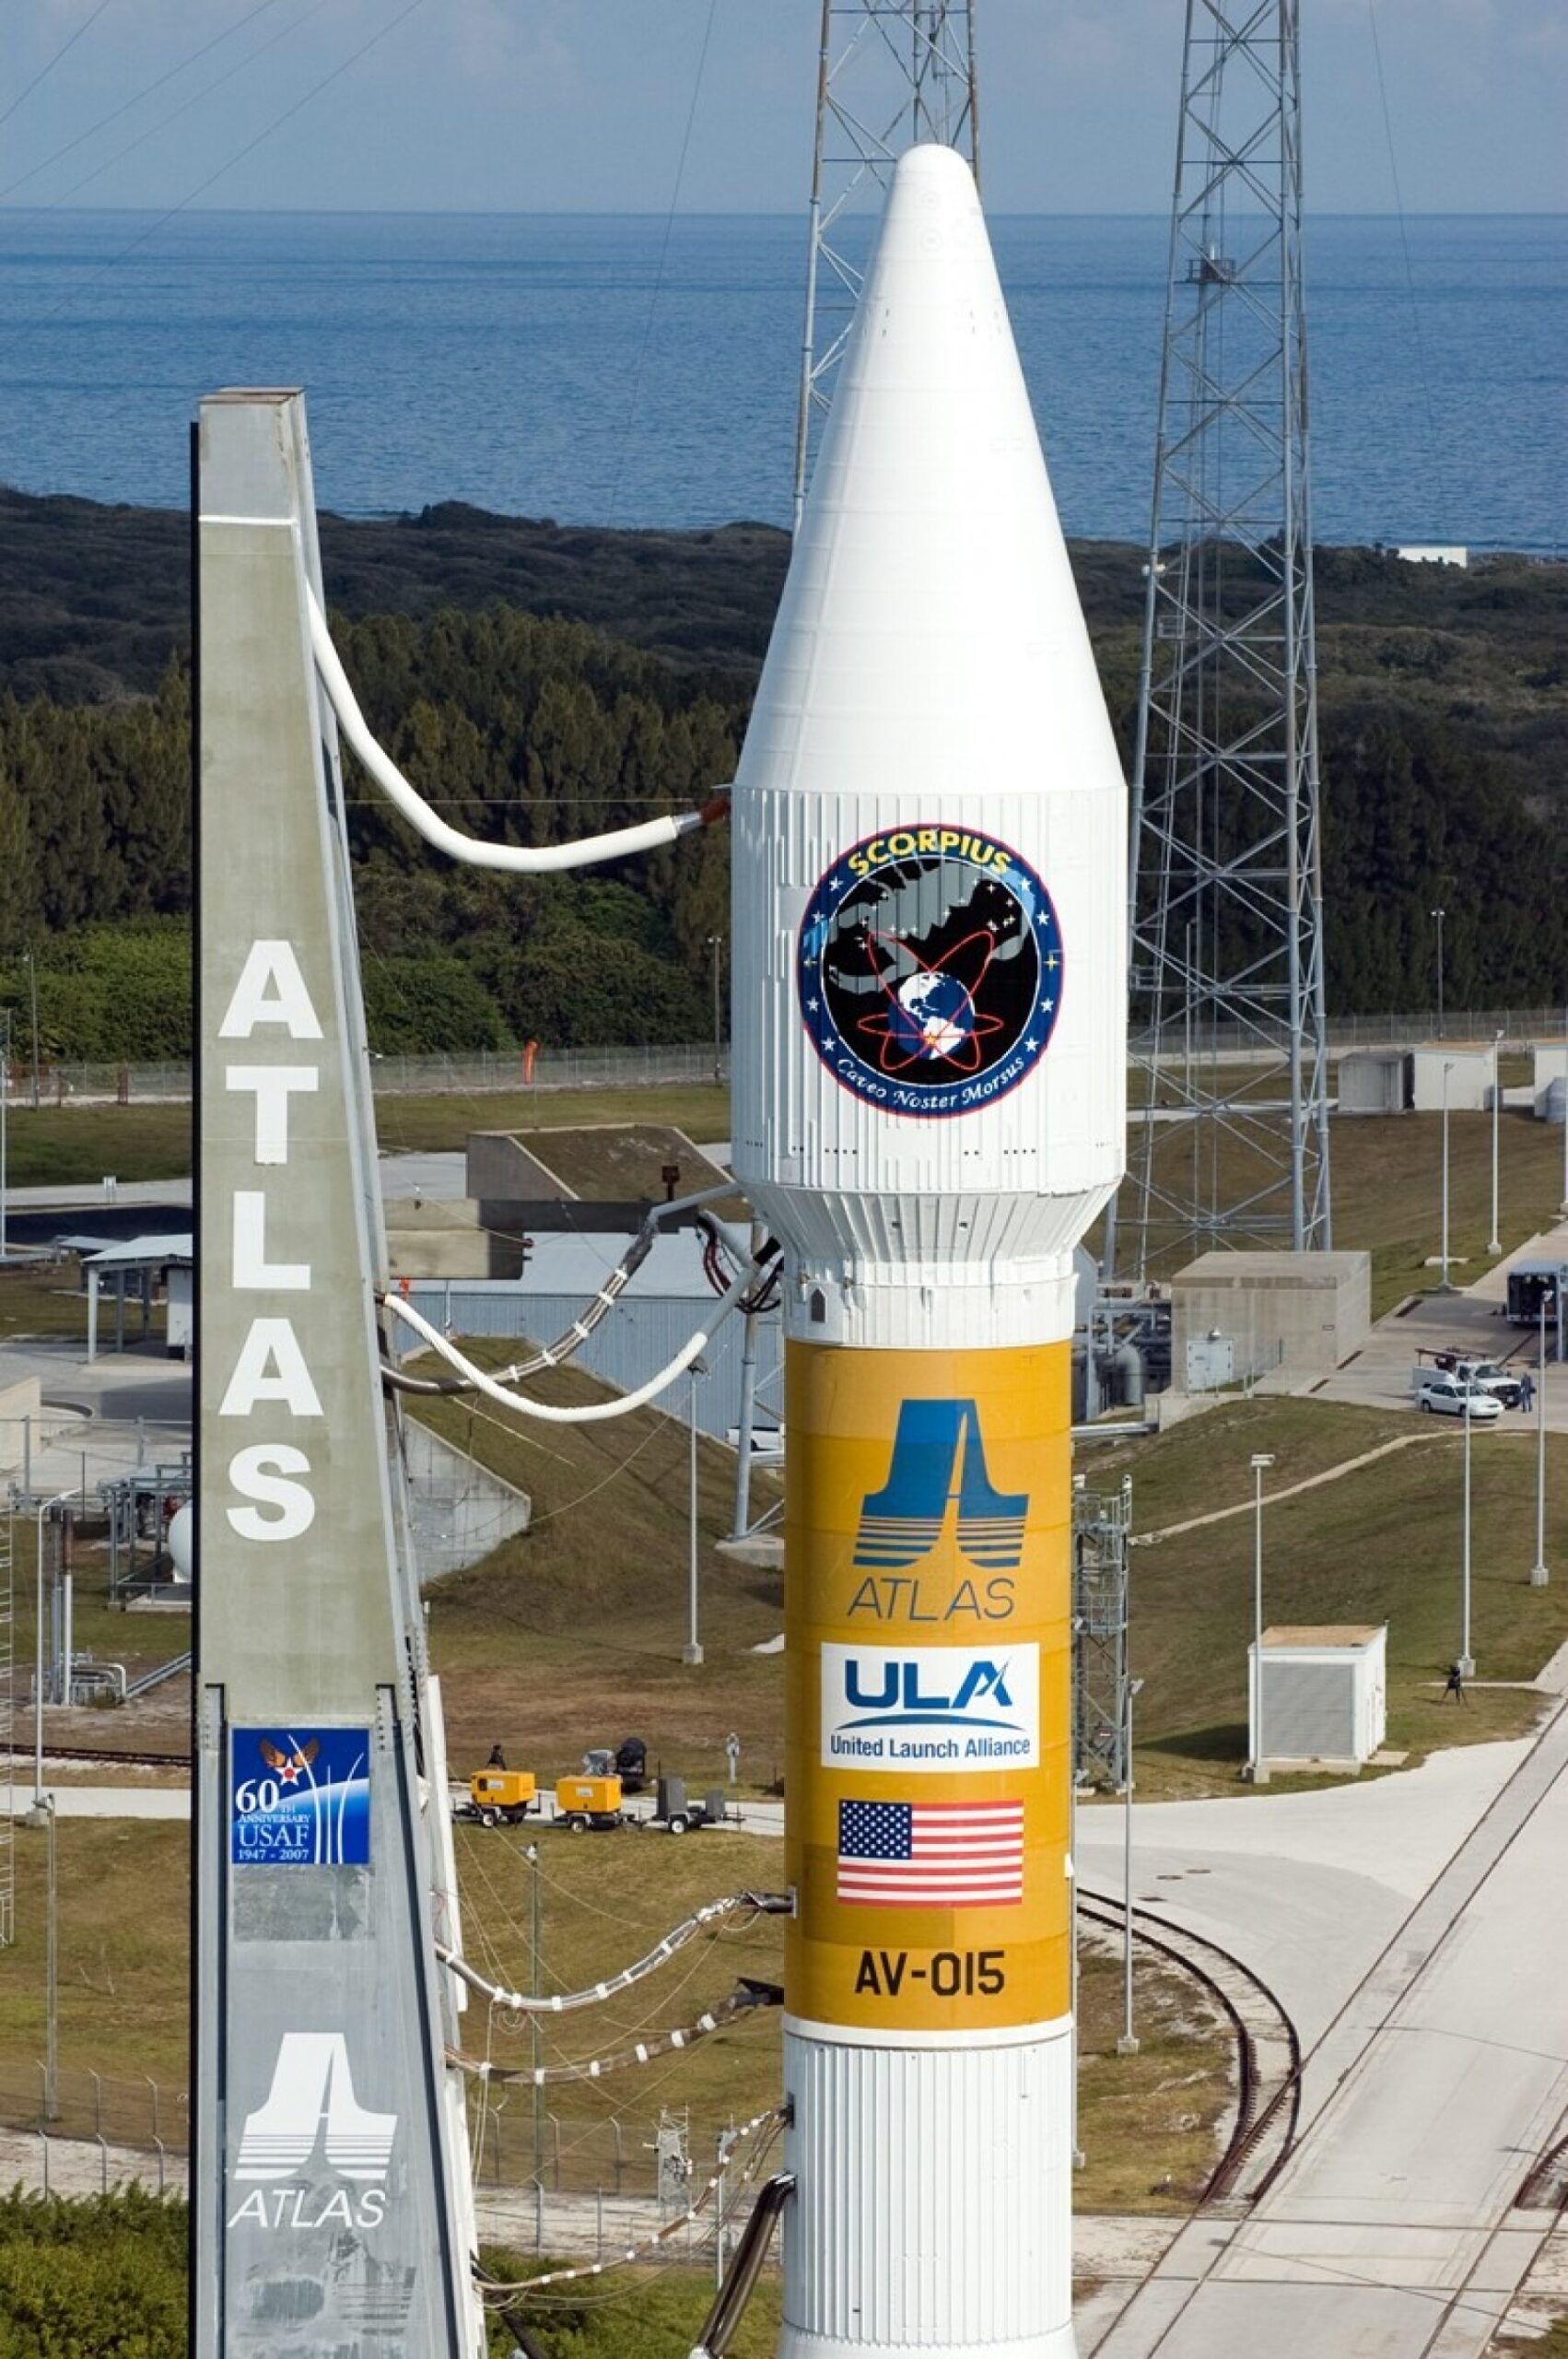 A United Launch Alliance facility